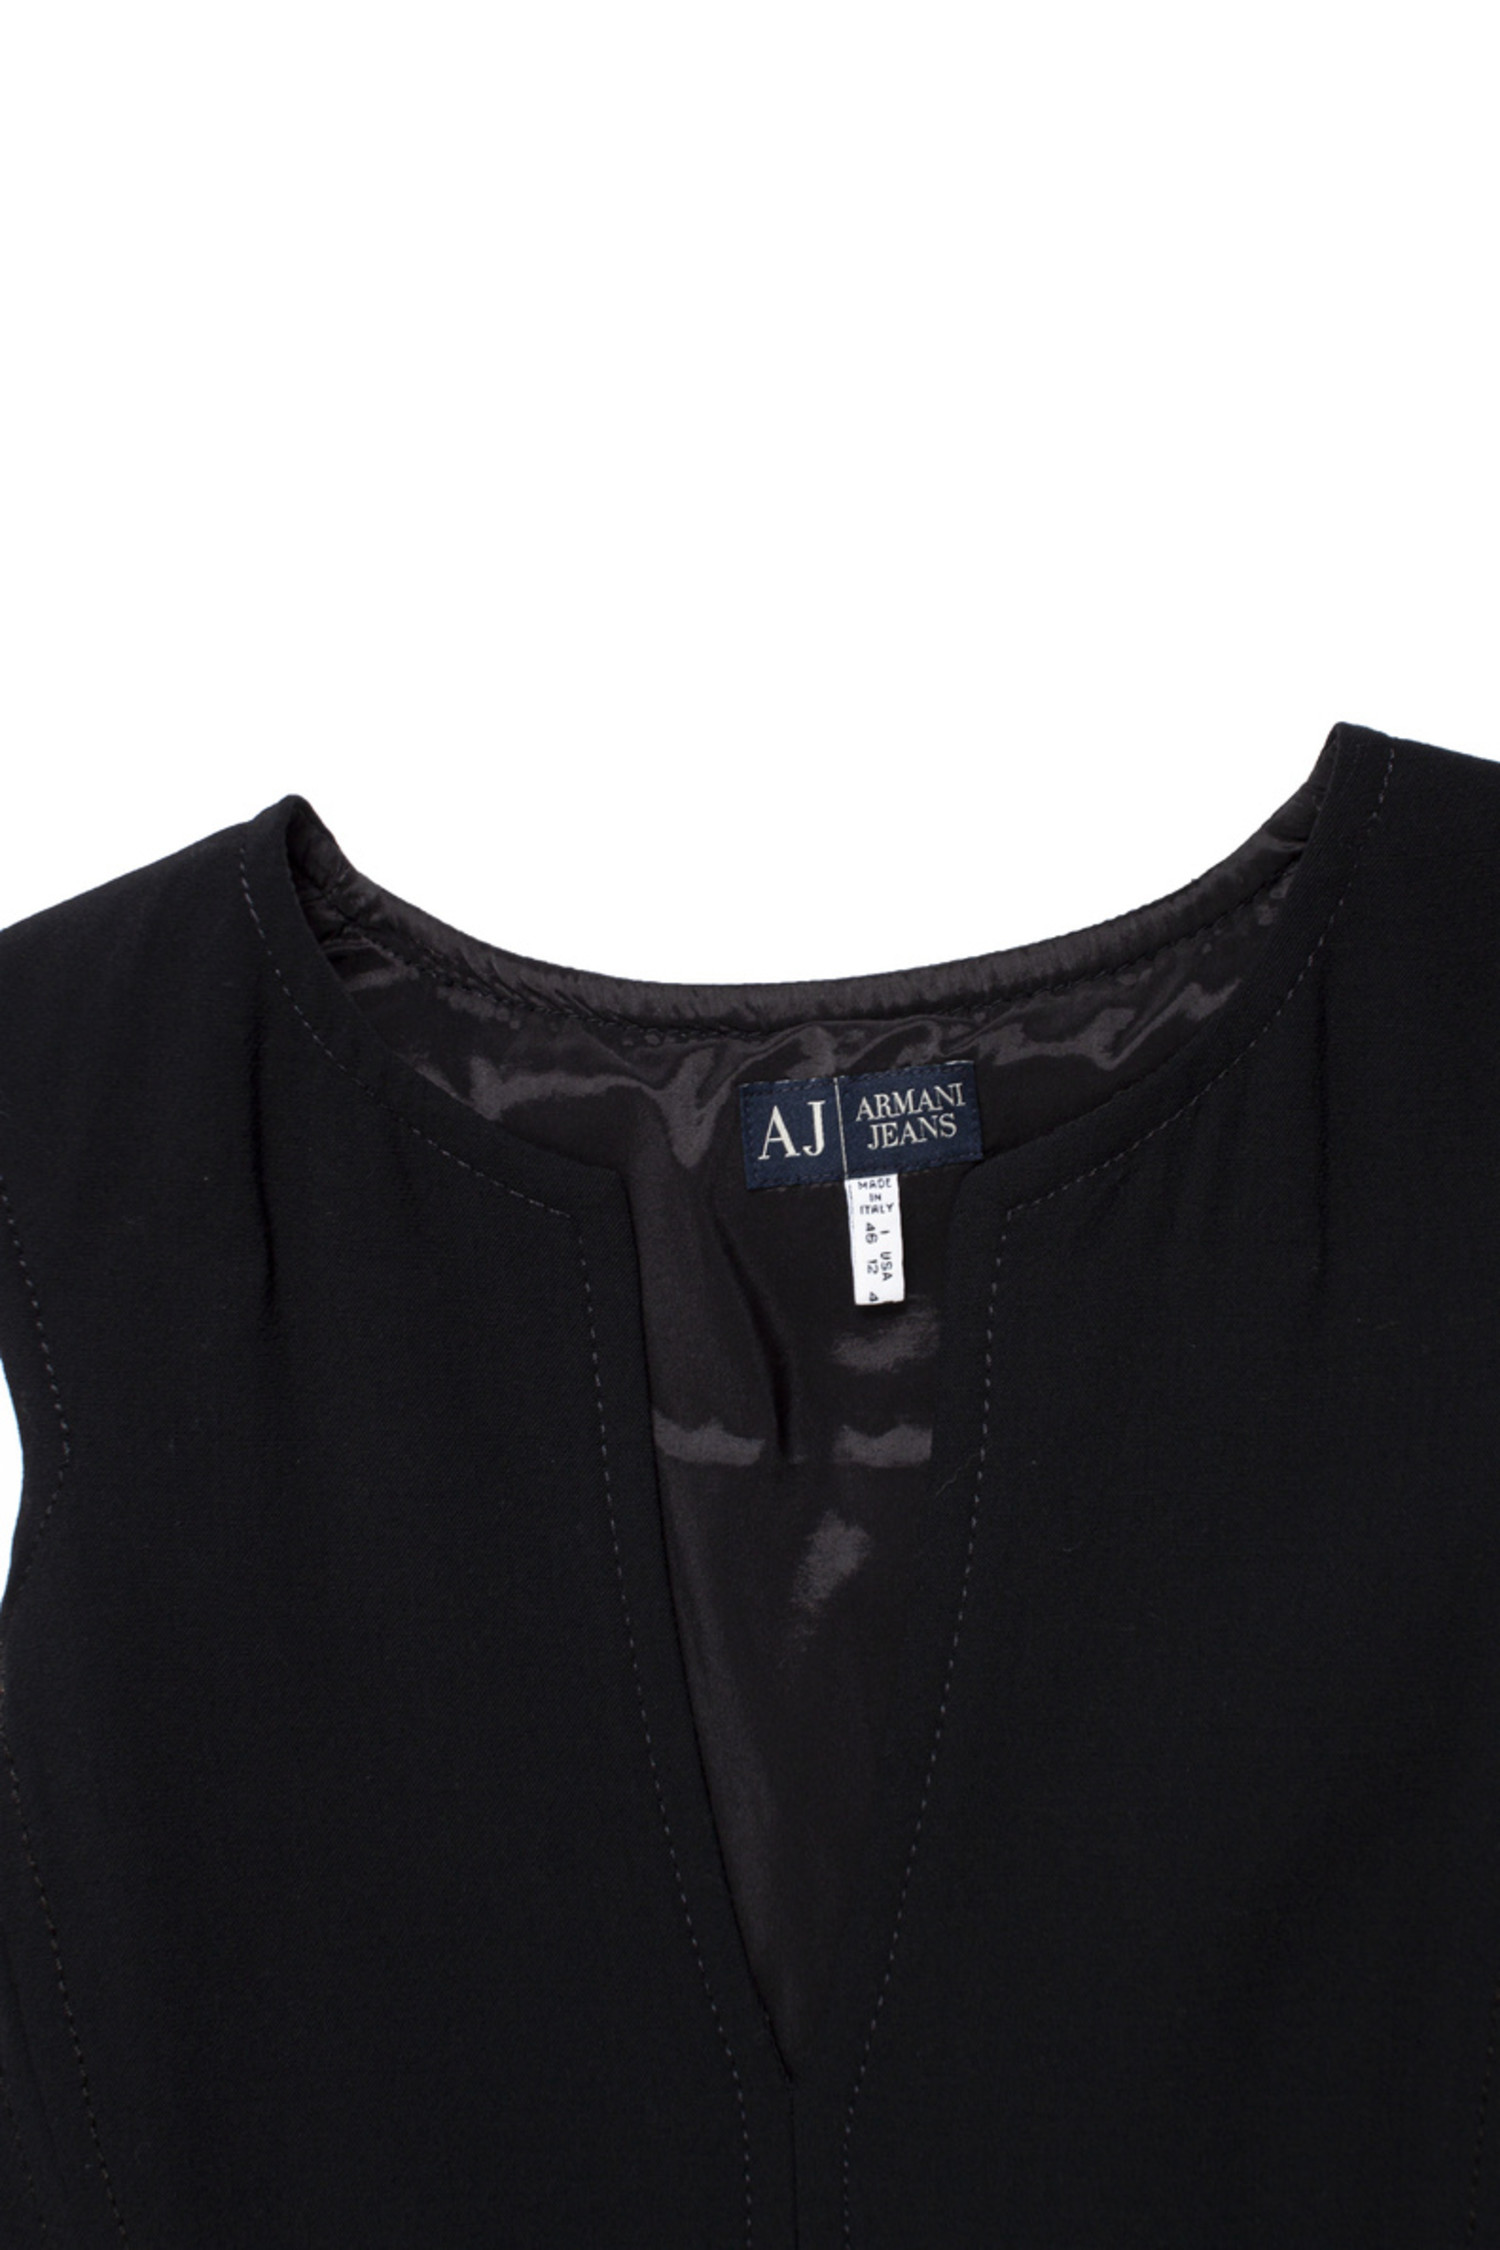 Bermad Levendig Garantie Armani Jeans, Zwart mouwloze jurk. - Unique Designer Pieces